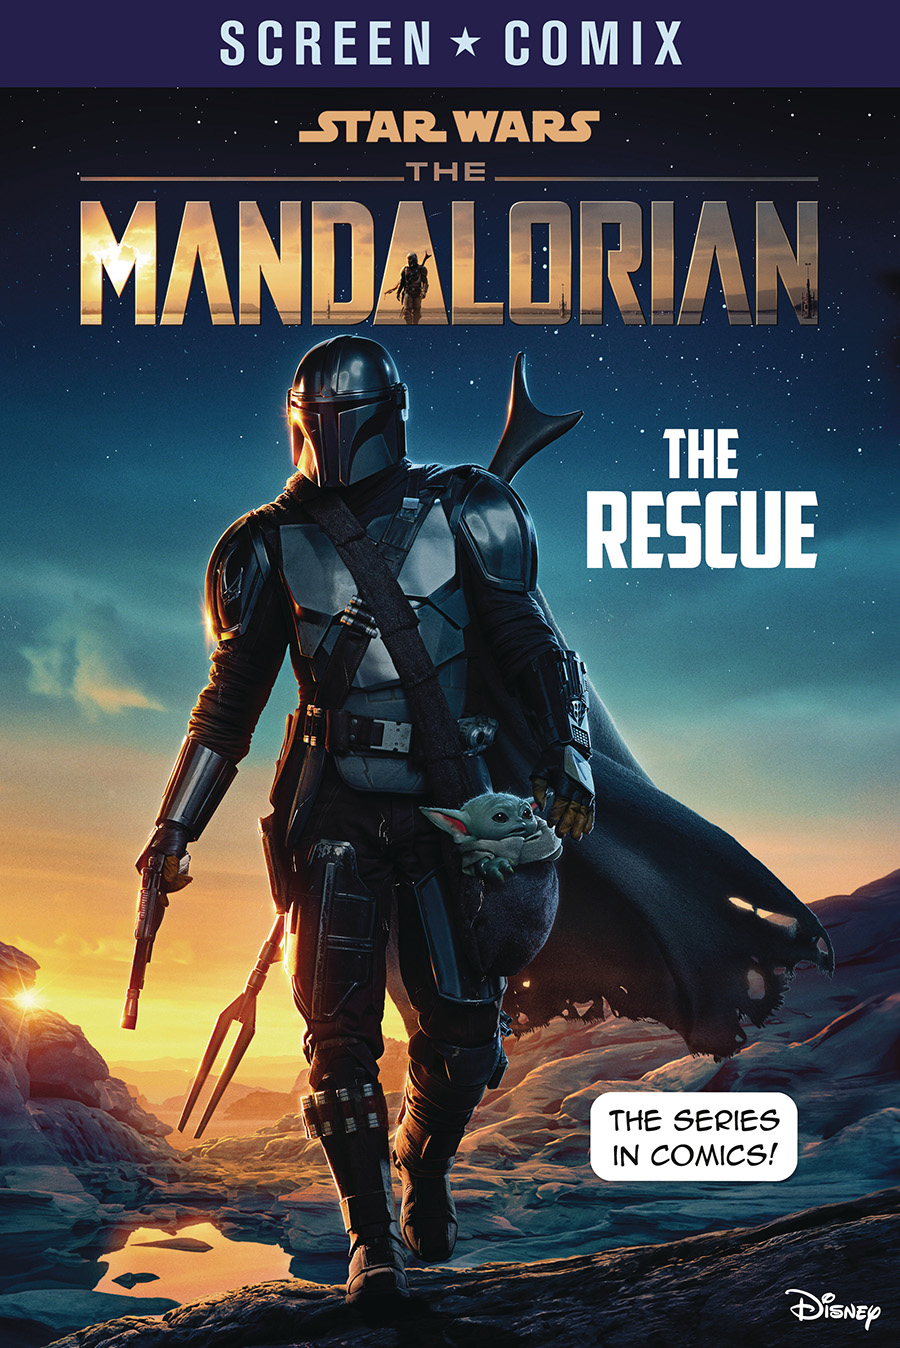 Star Wars The Mandalorian Screen Comix Season 1 Vol 2 Rescue TP